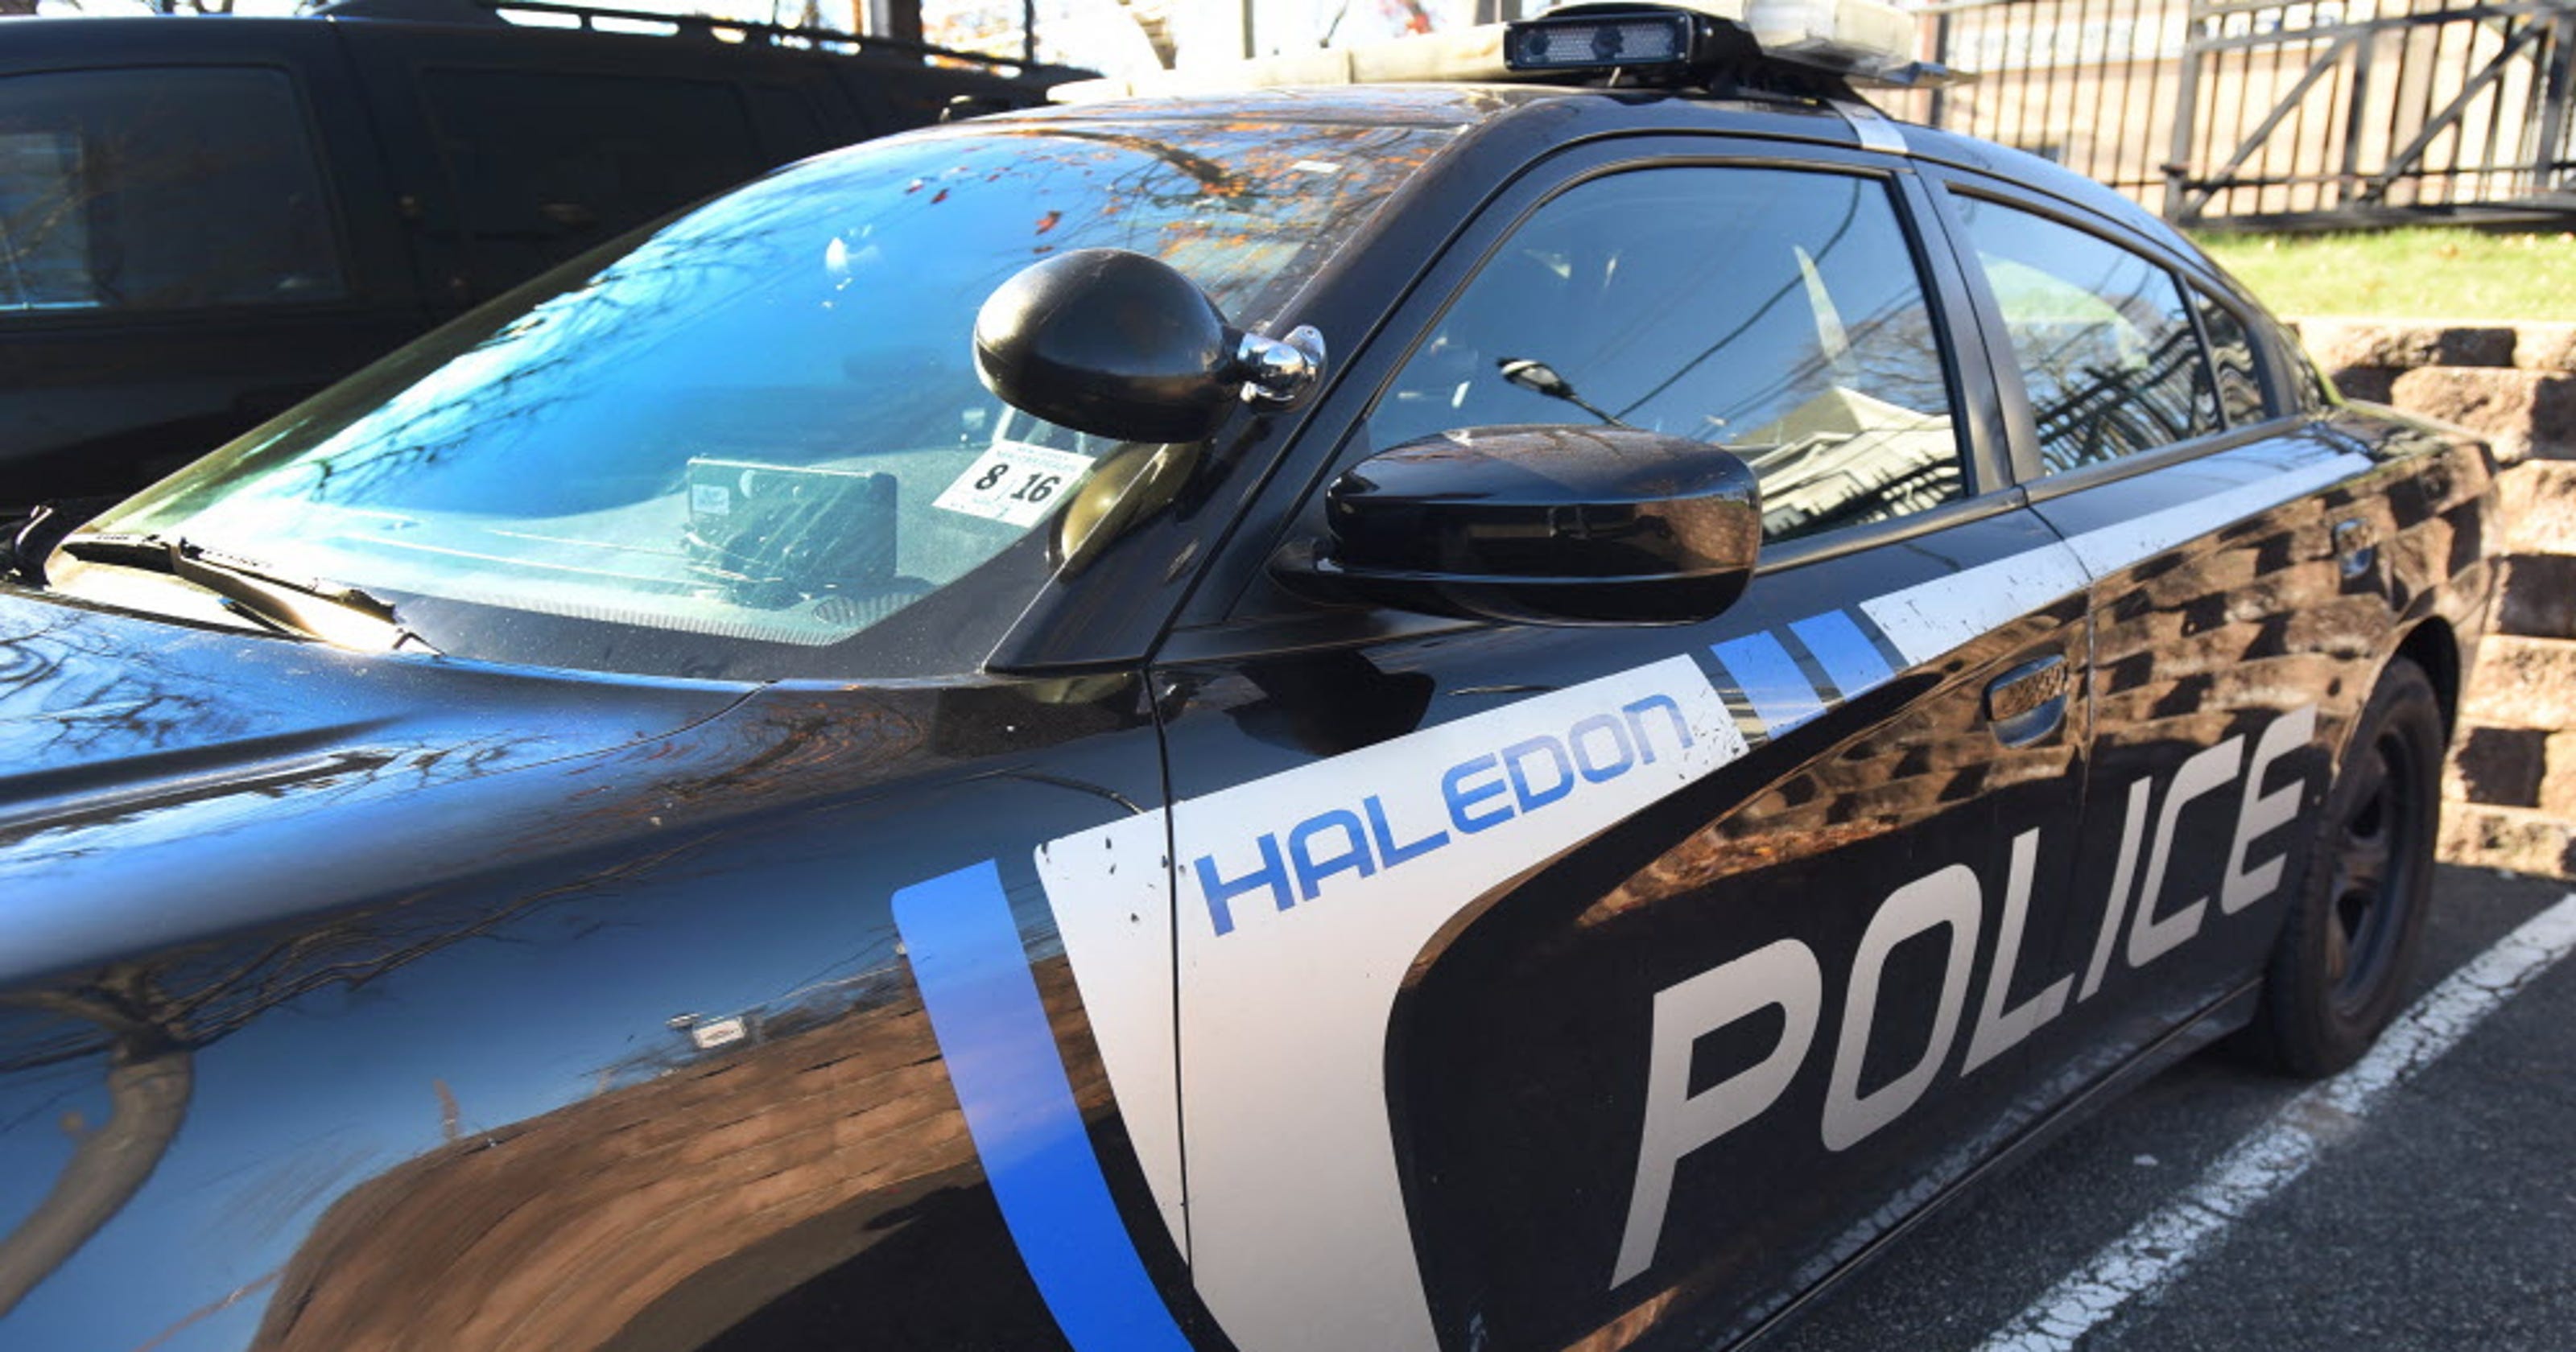 Haledon North Haledon approve 2% police salary hike